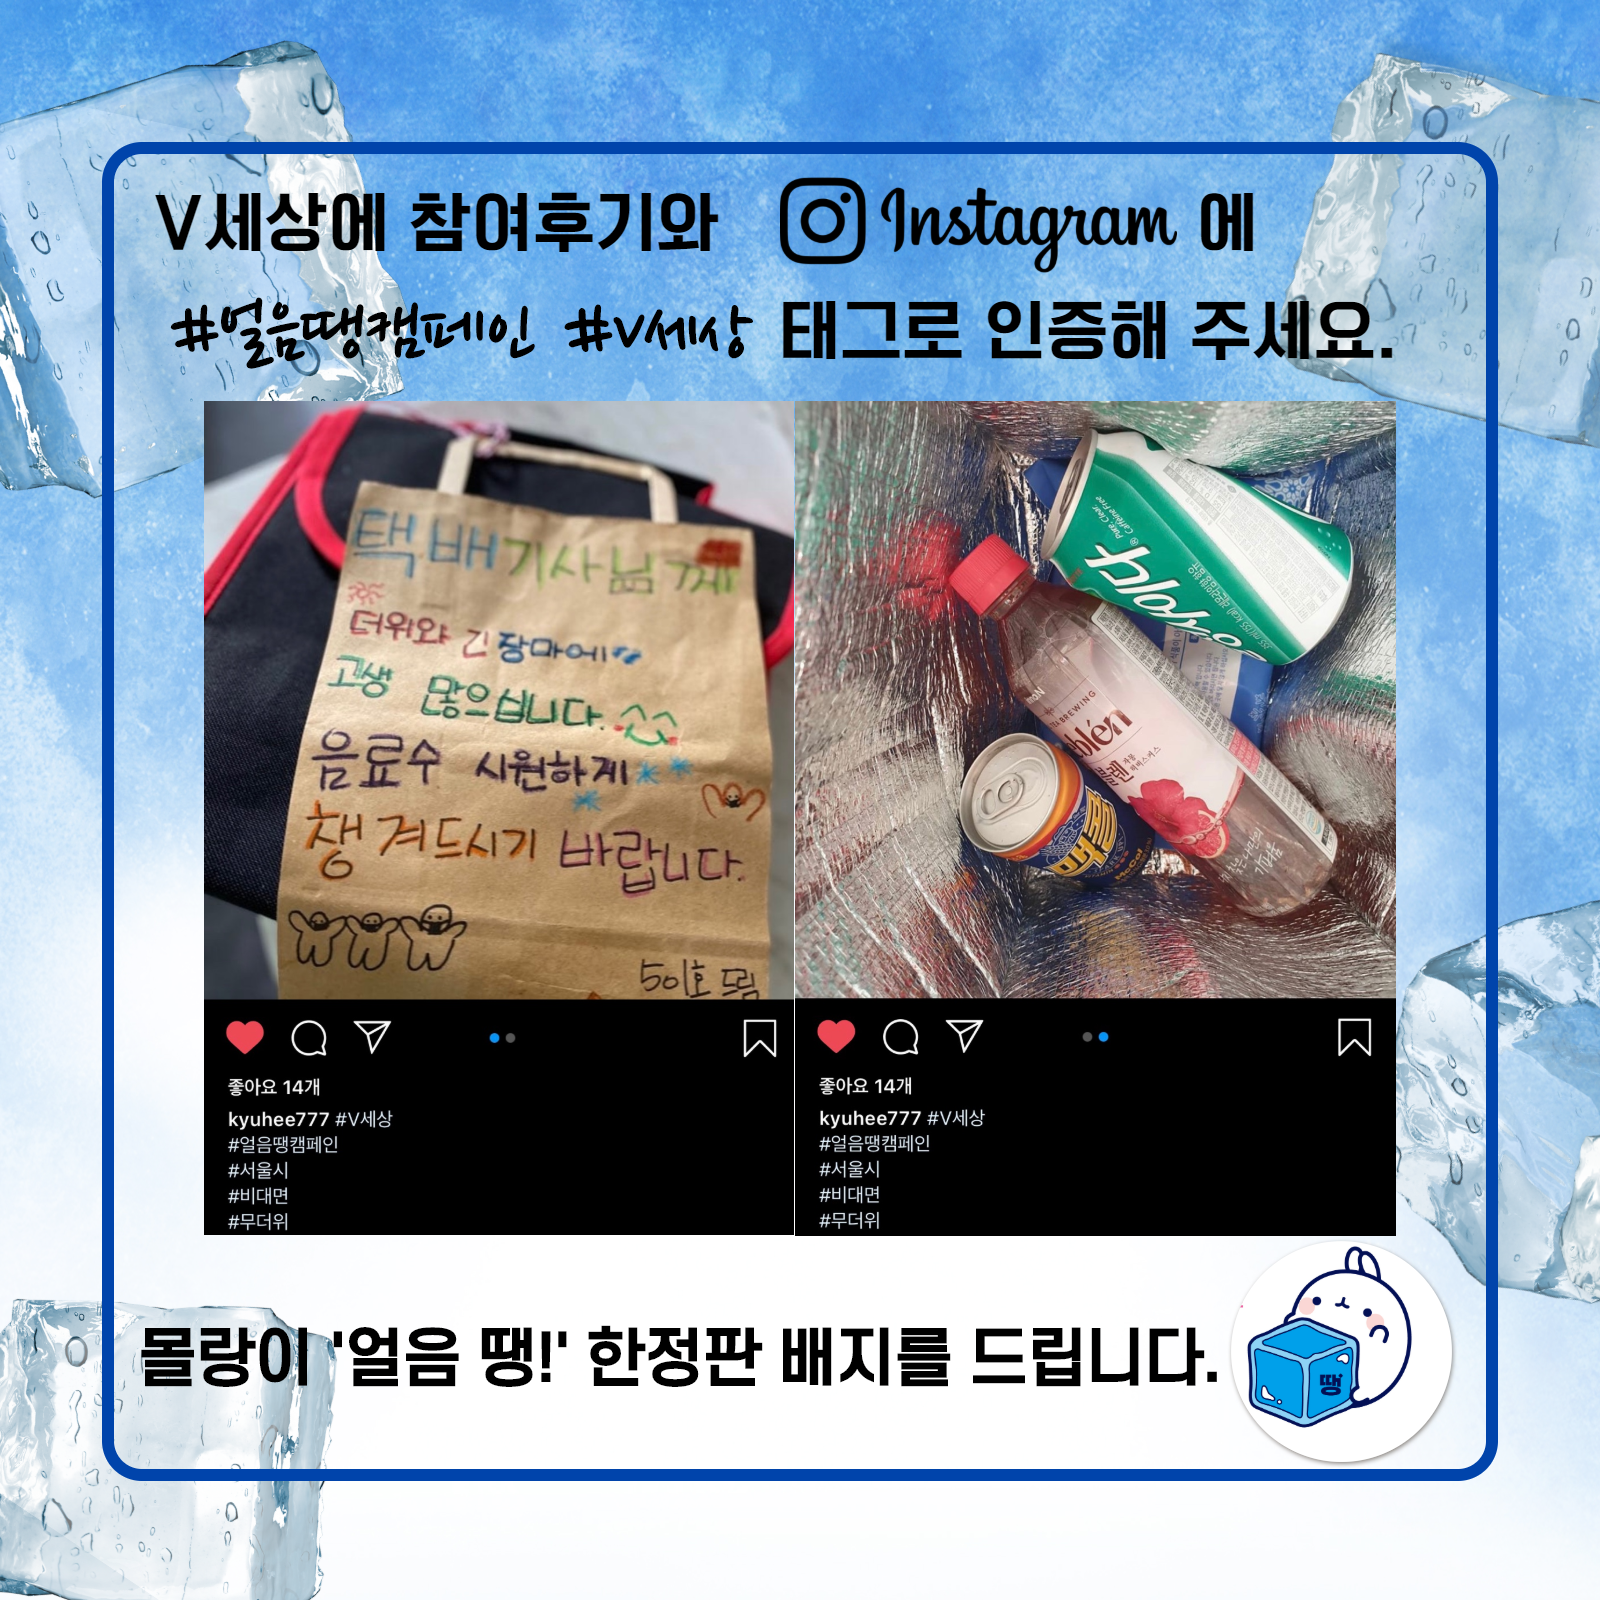 V세상에 참여후기와 Instagram 에 #얼음땡캠페인 #V세상 태그로 인증해 주세요. 몰랑이 얼음 땡! 한정판 배지를 드립니다.